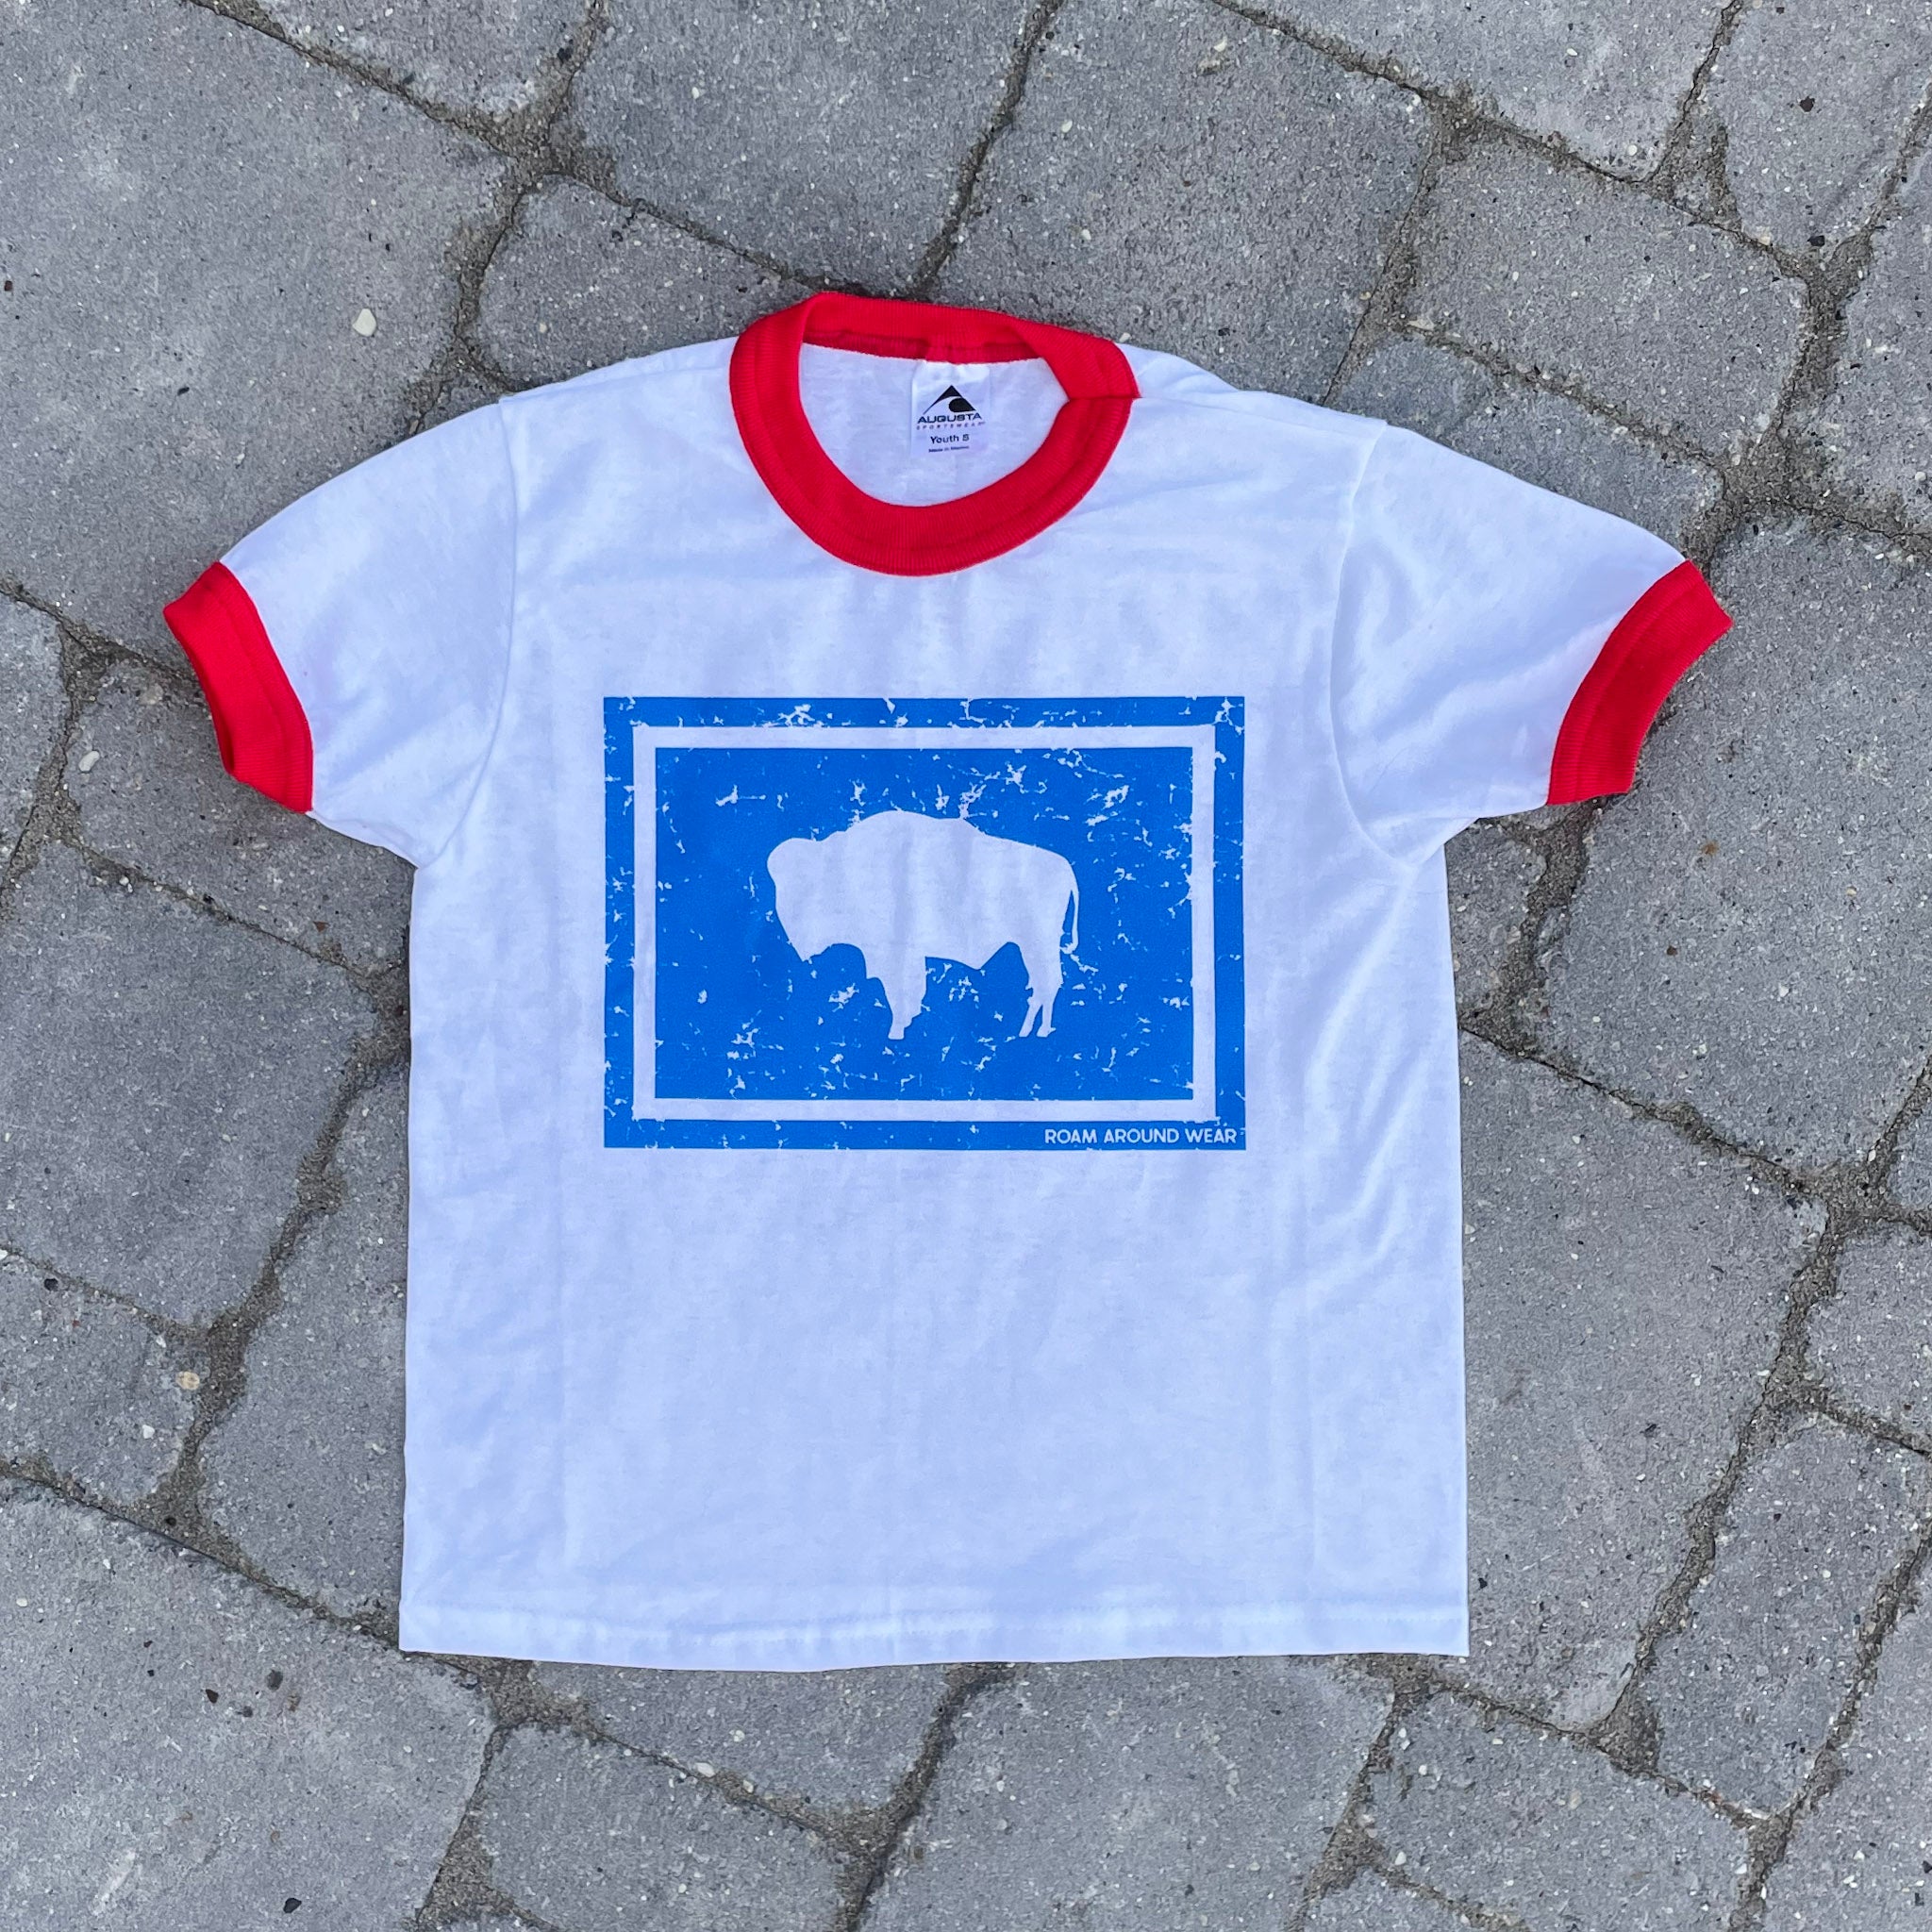 Wyoming Tee Shirt - Bison Tee Shirt - Buffalo Tee Shirt - Roam Around Wear is a Wyoming t-shirt company based in Gillette, Wyoming.